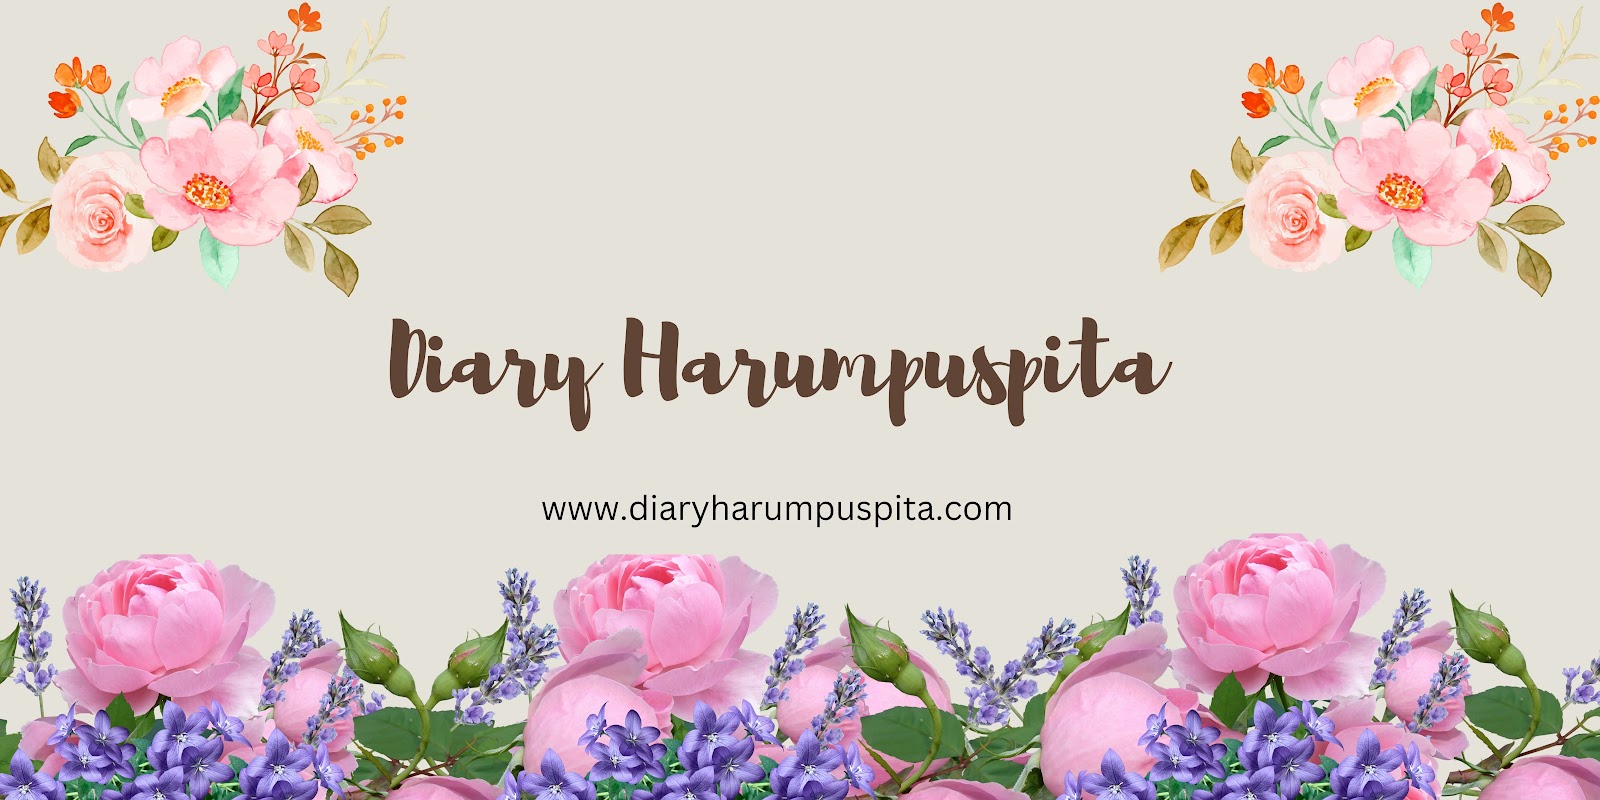 Diary Harumpuspita